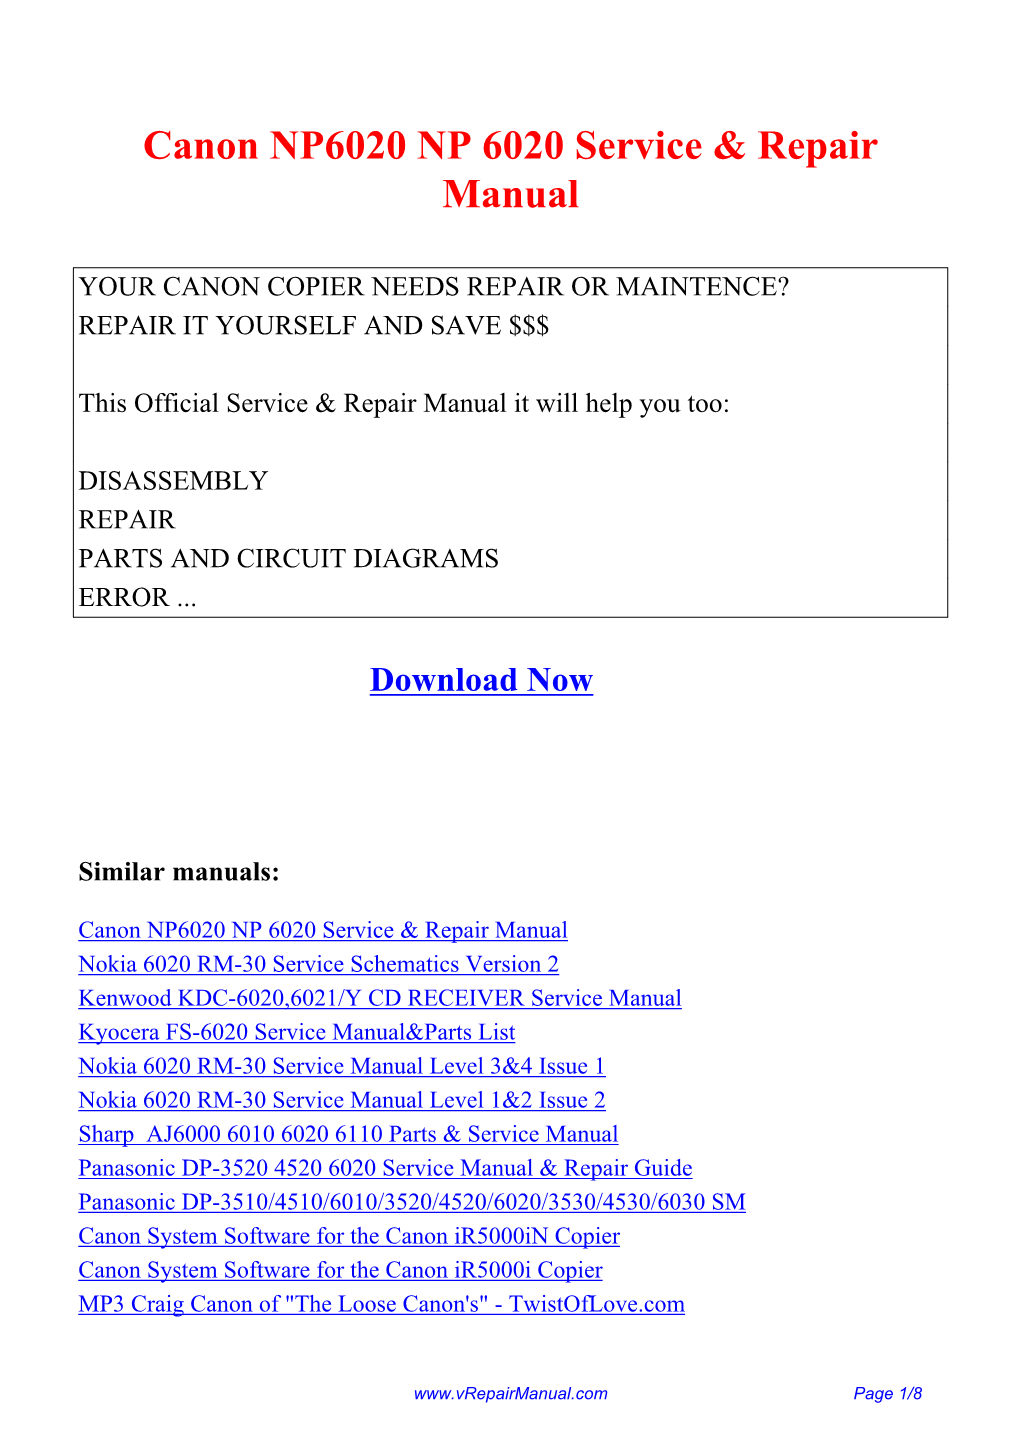 Canon NP6020 NP 6020 Service & Repair Manual